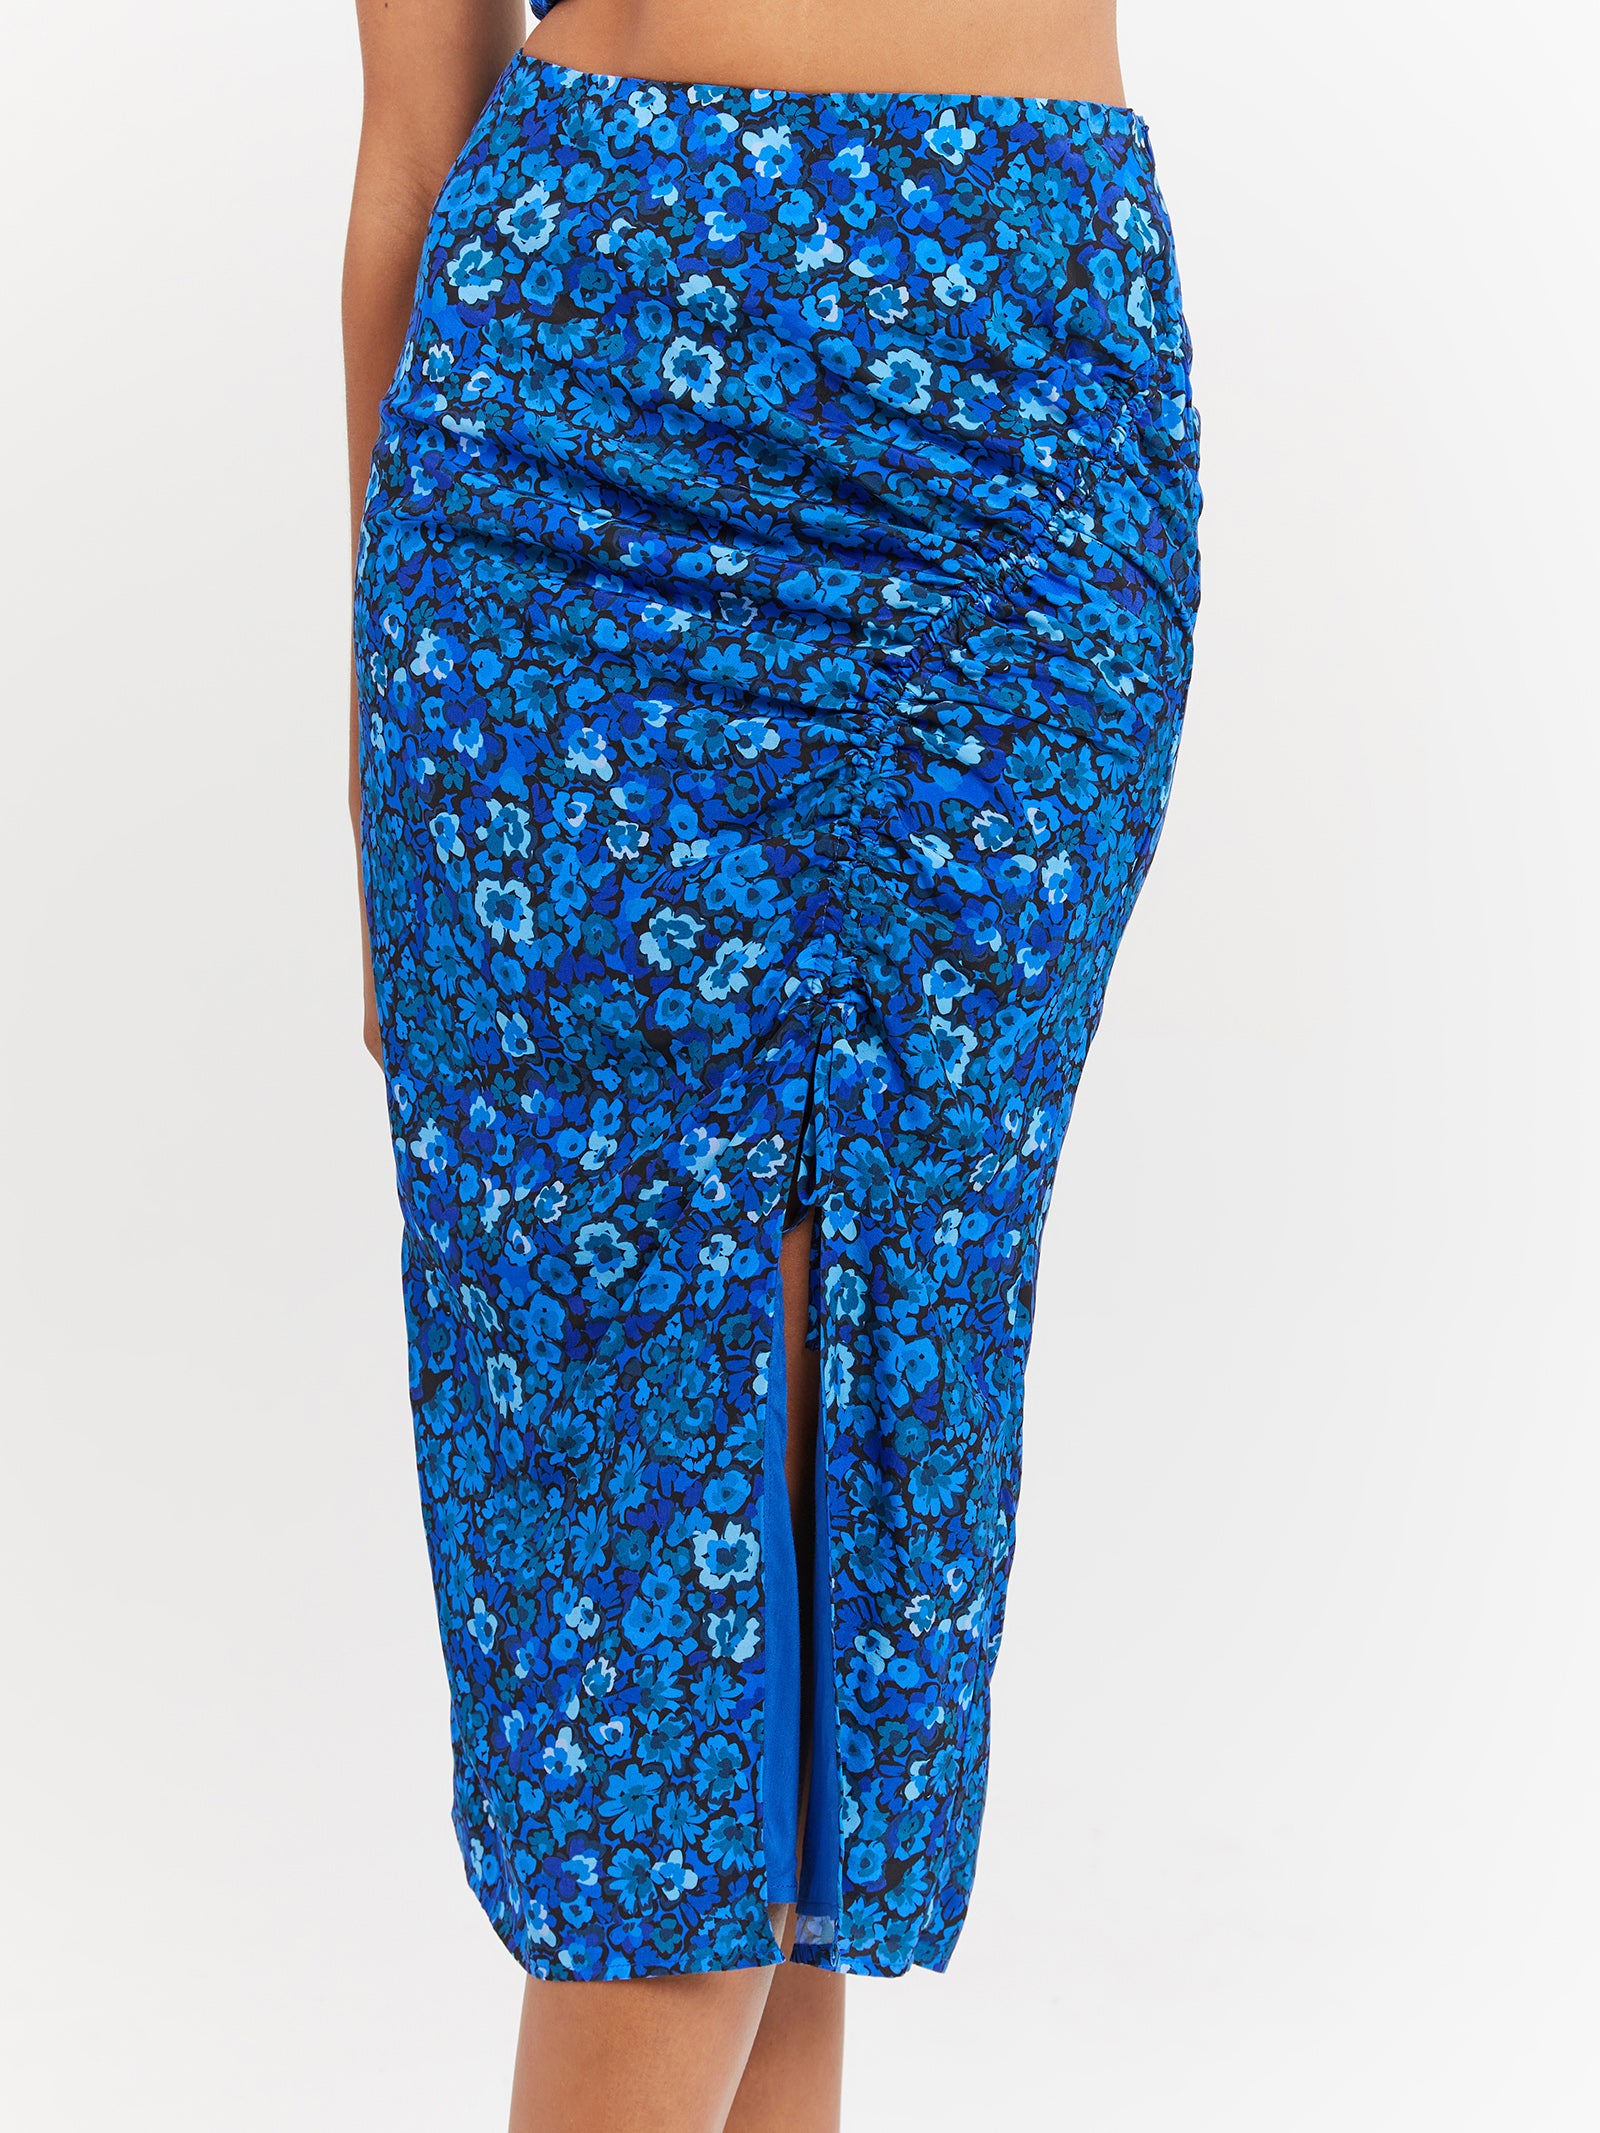 Elyna Ruched Midi Skirt in Azure Floral